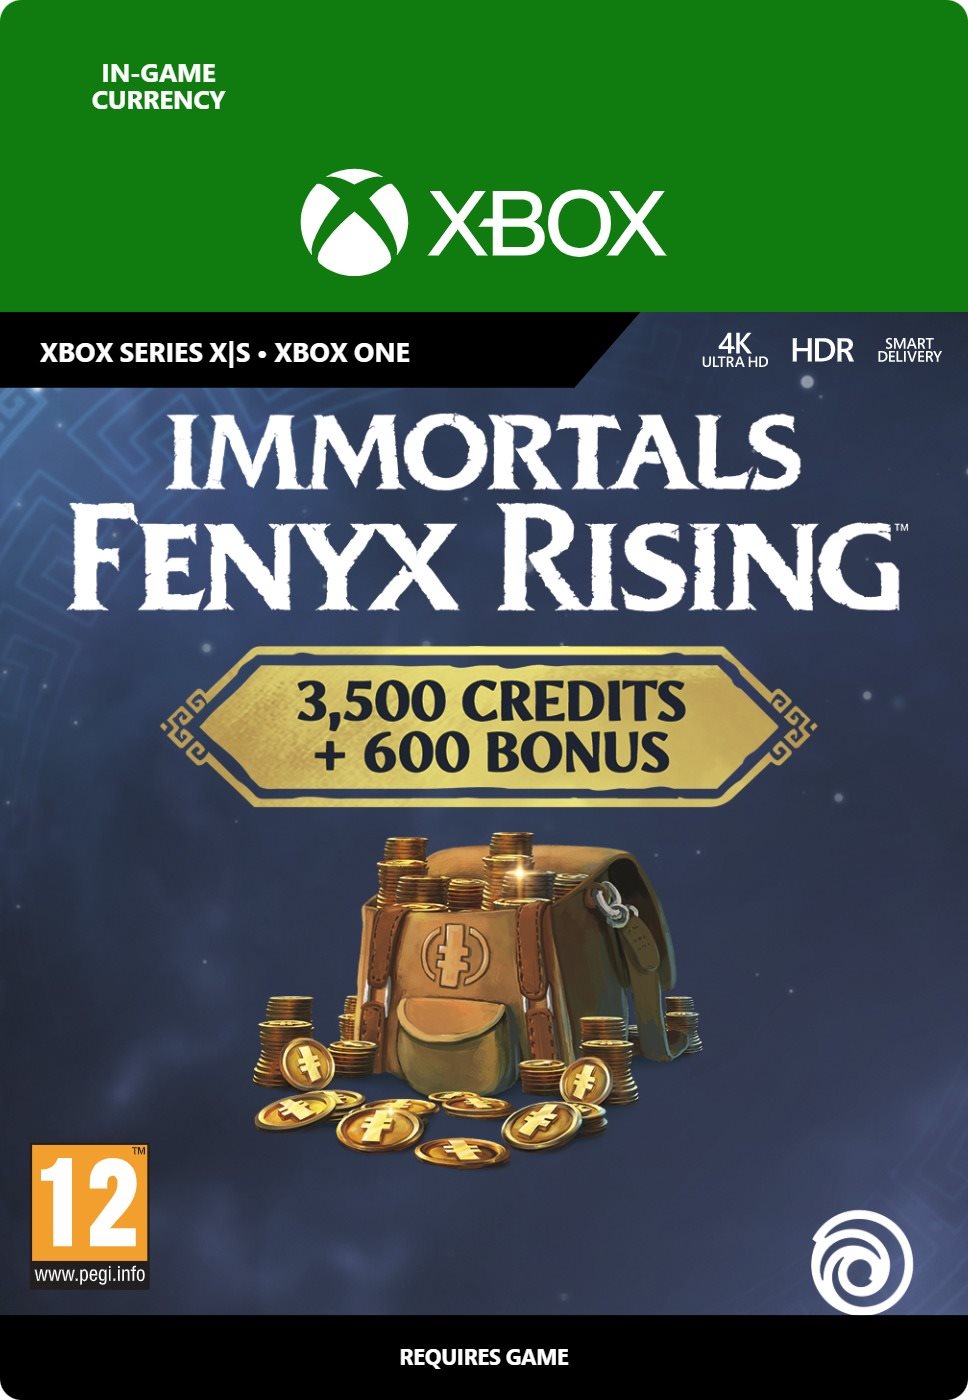 Immortals: Fenyx Rising - Colossal Credits Pack (4100) - Xbox Digital